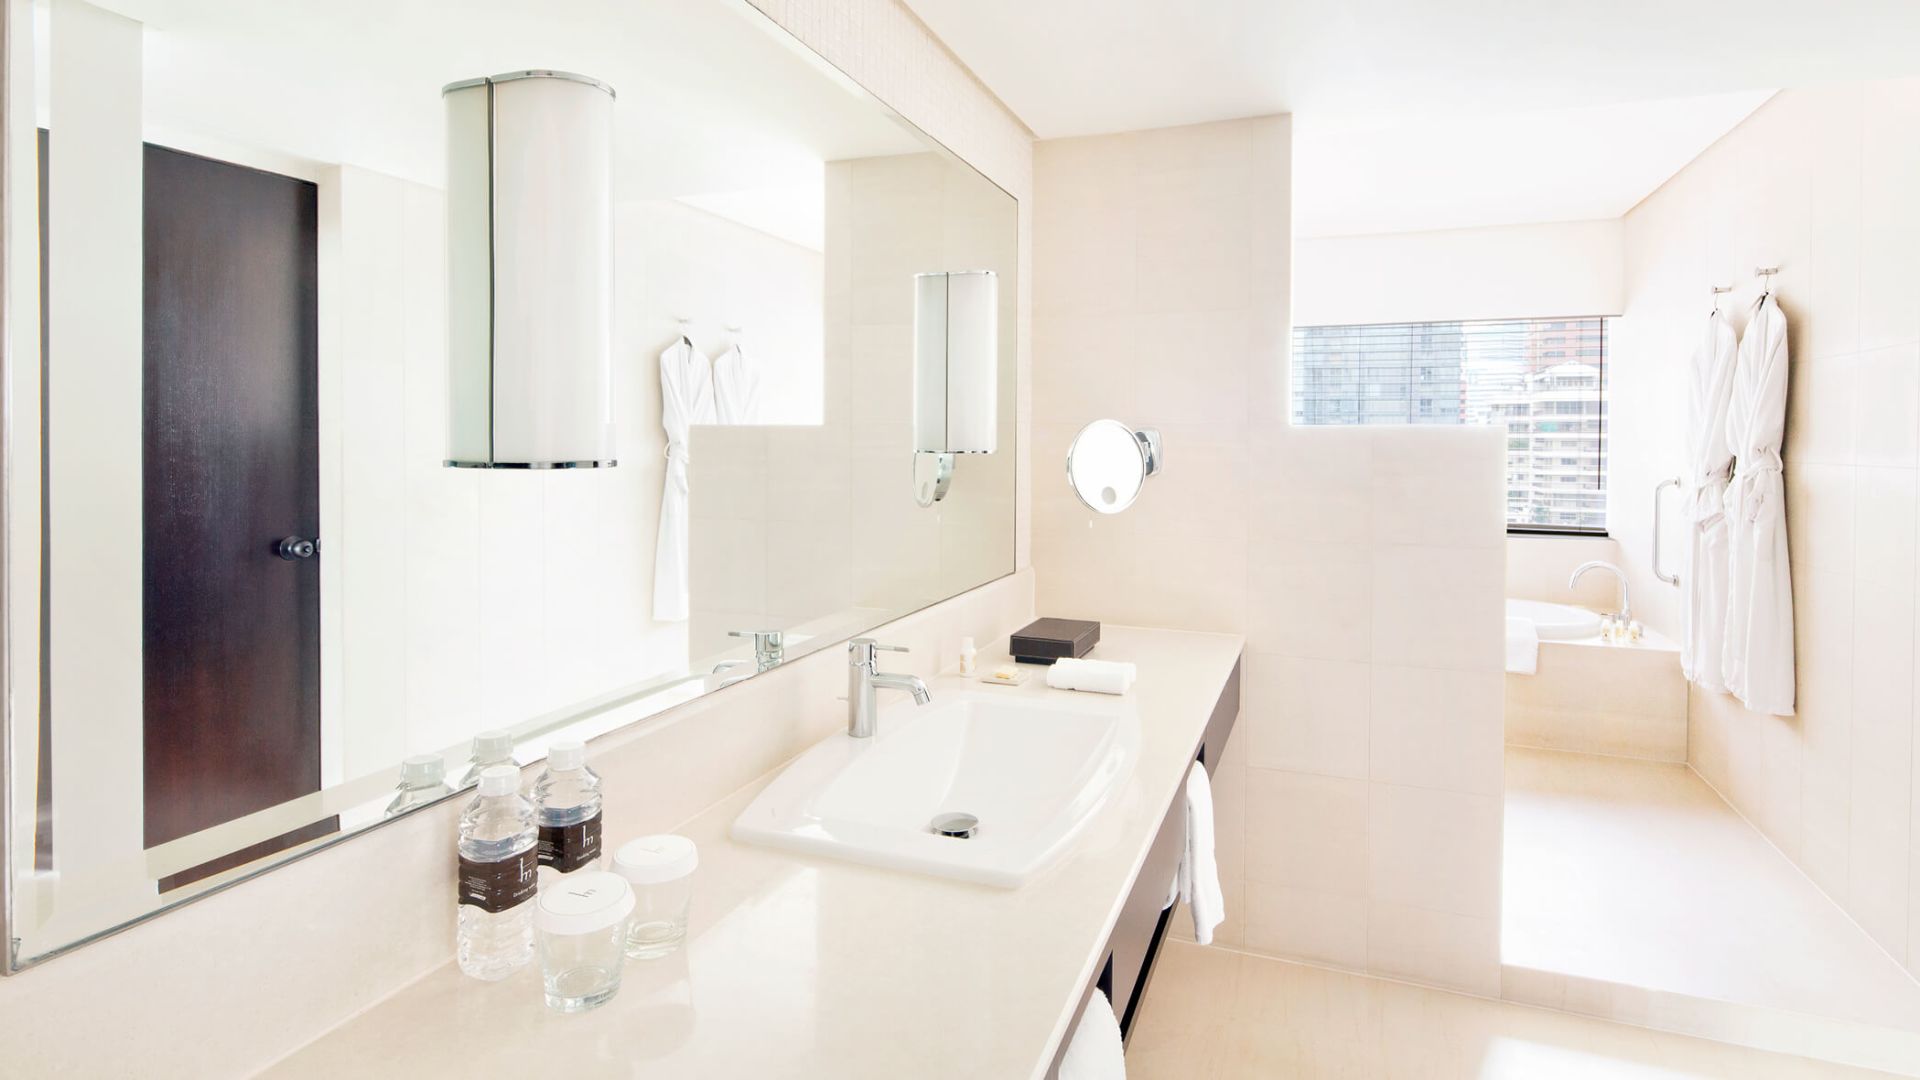 Bathroom with bathtub and spacious vanity - Image